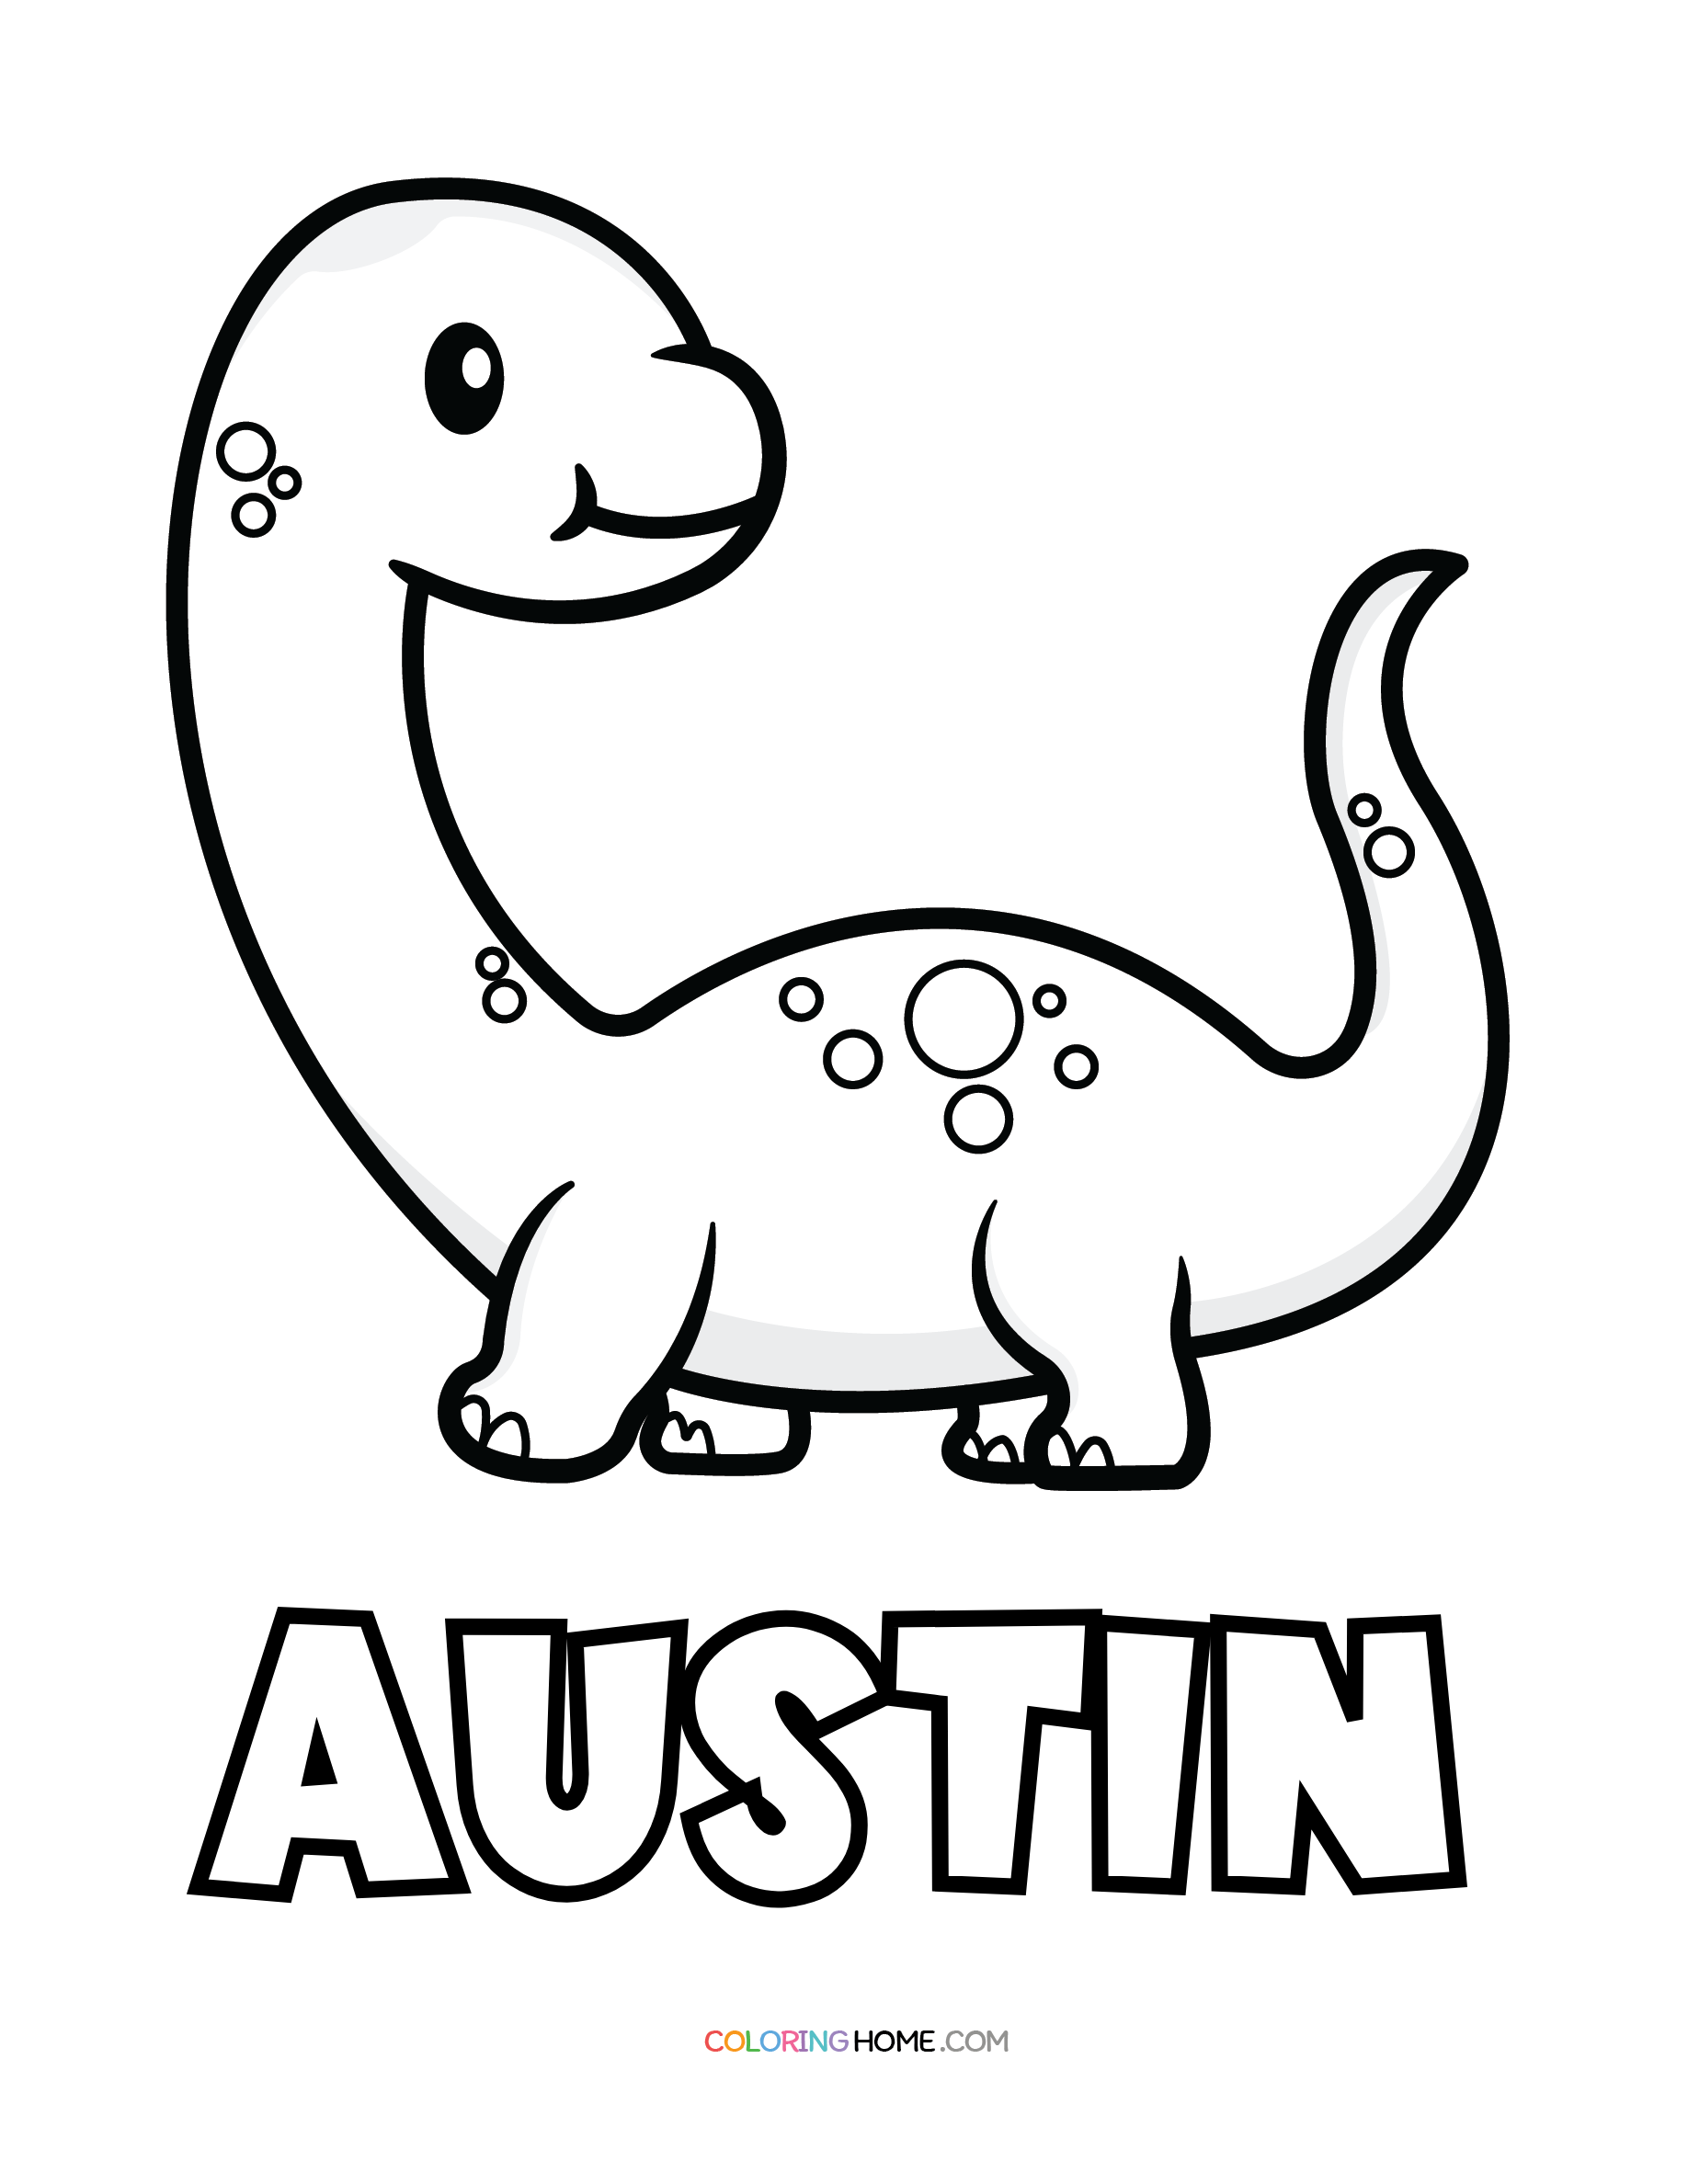 Austin dinosaur coloring page